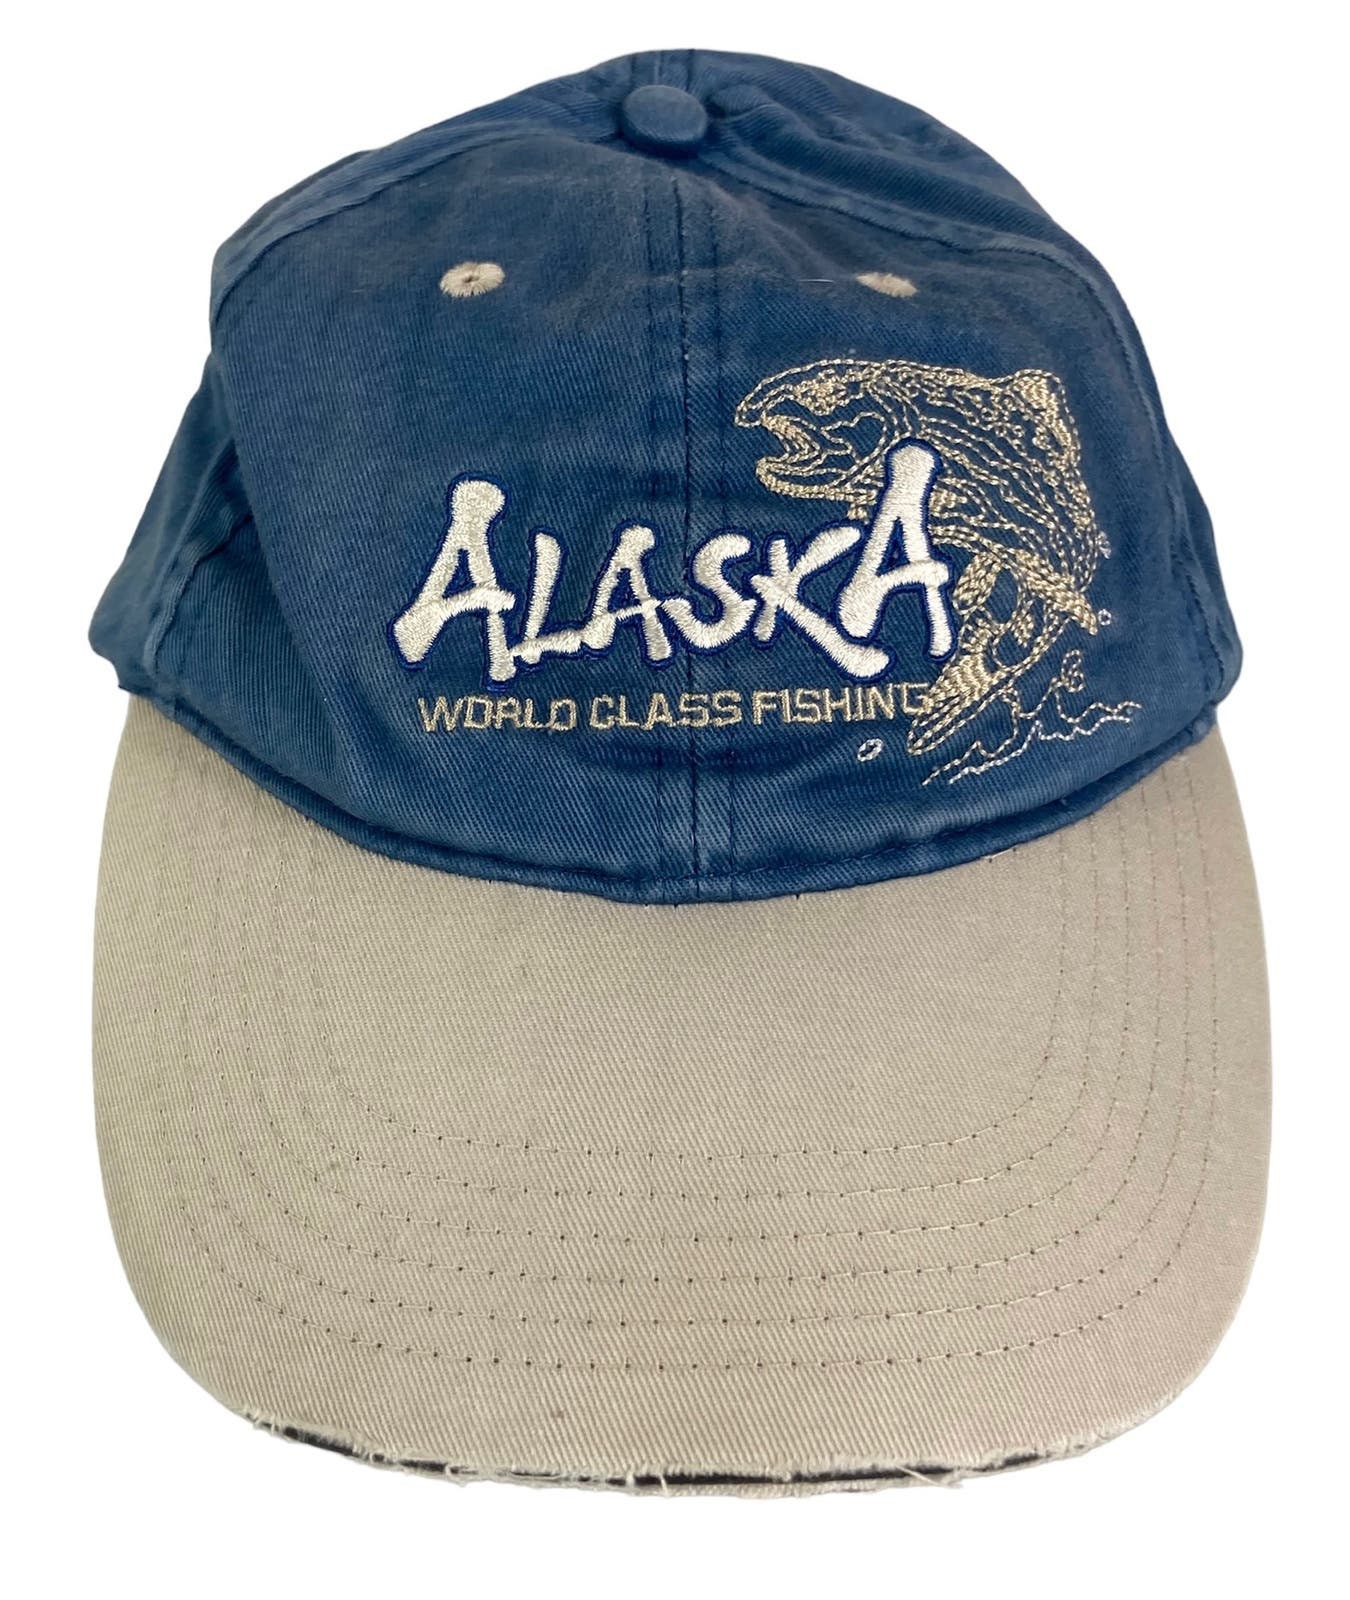 Vintage Alaska World Class Fishing Hat Blue Strapback Rare